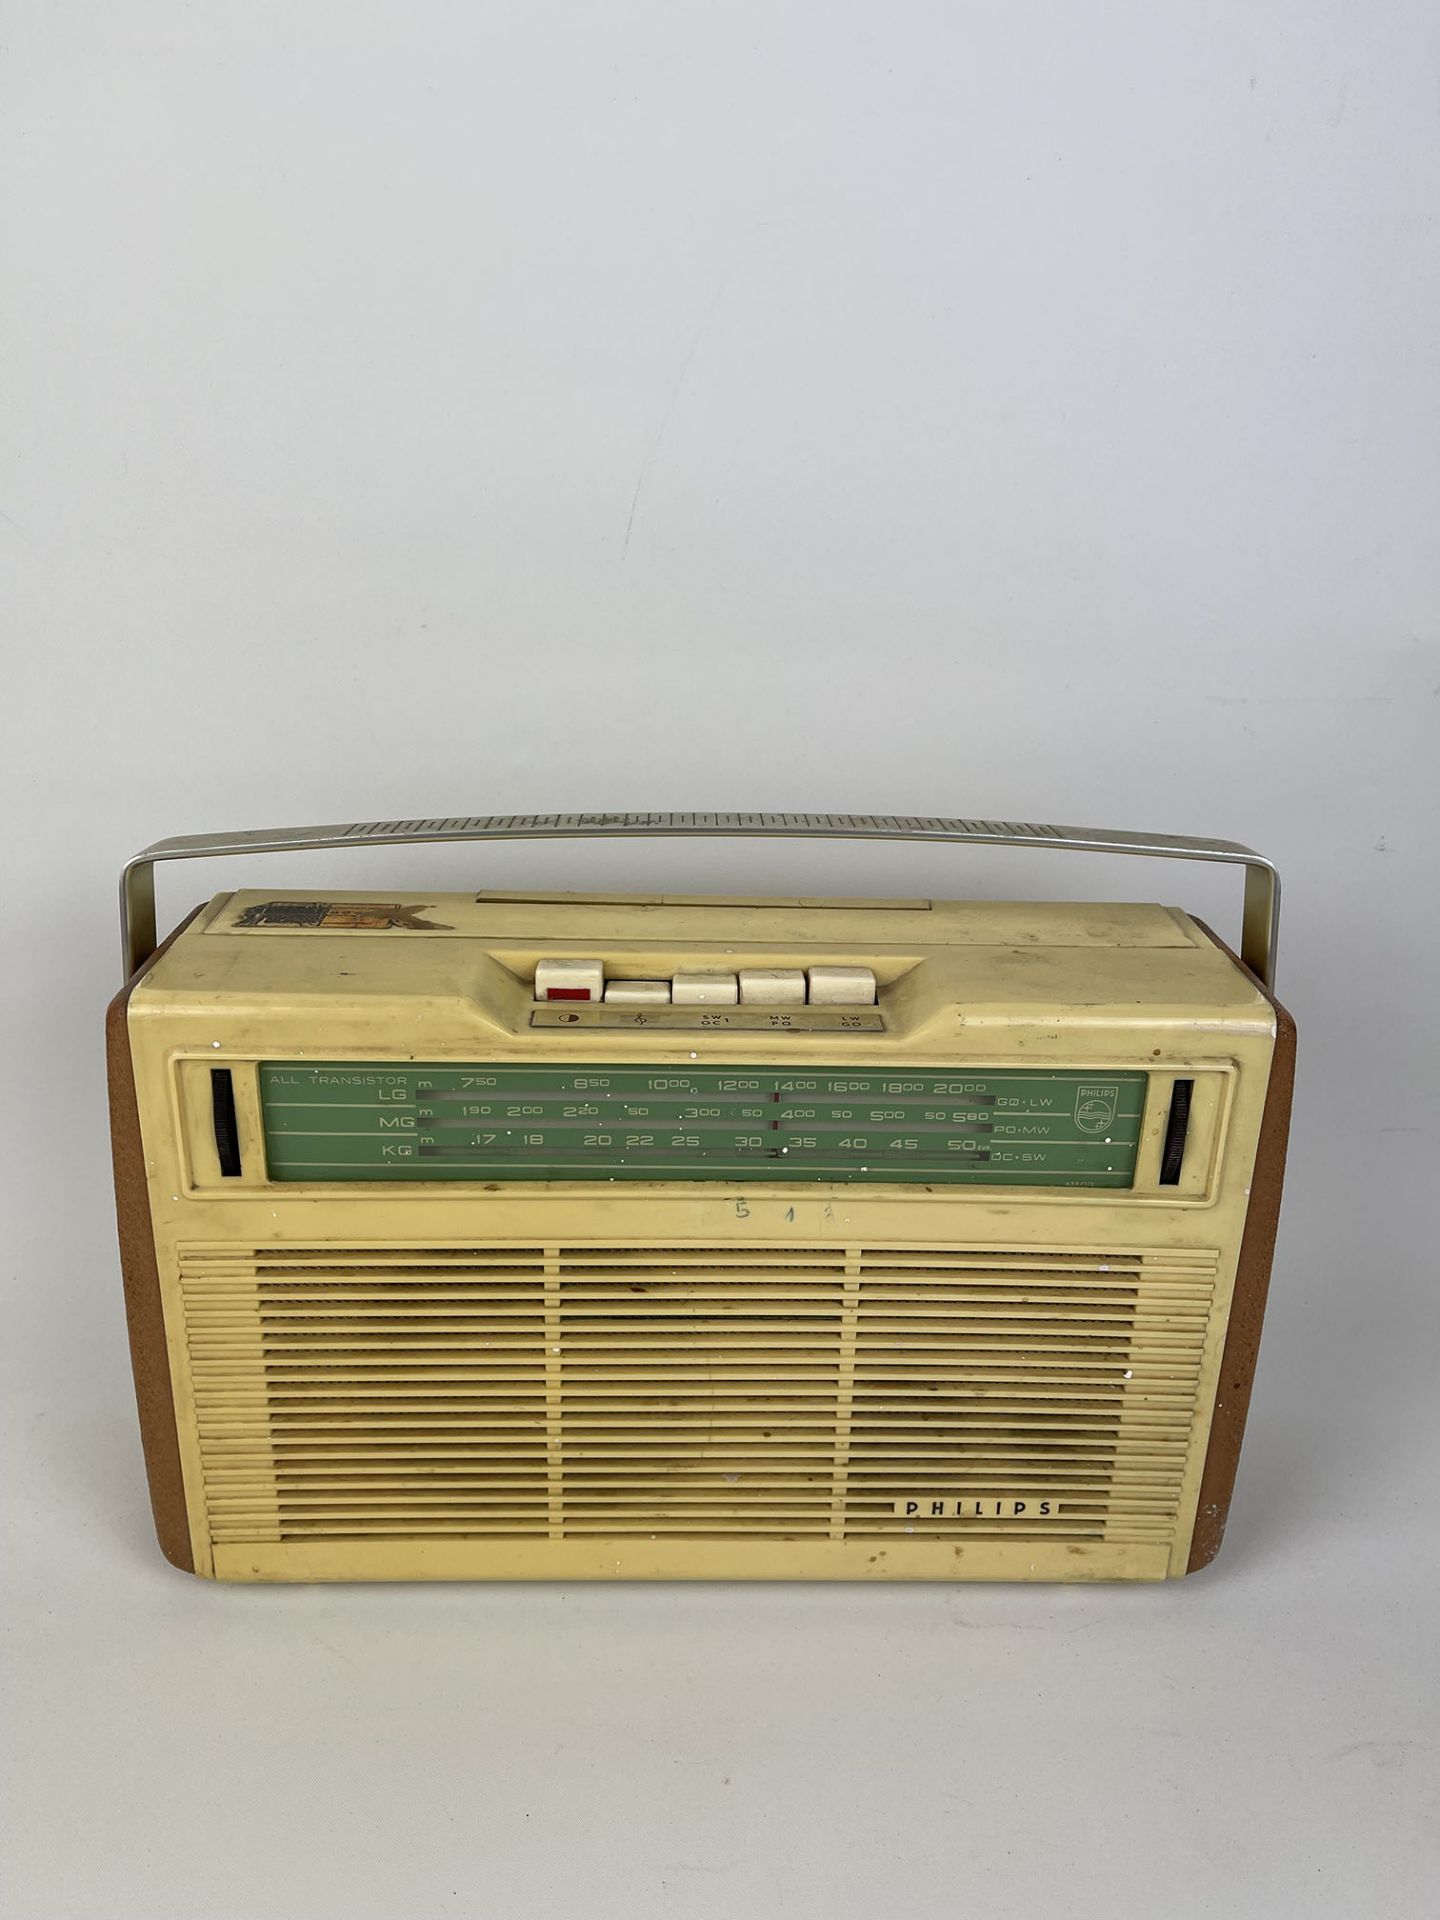 Lot of 4 Vintage Transitor Radioss - Image 6 of 6